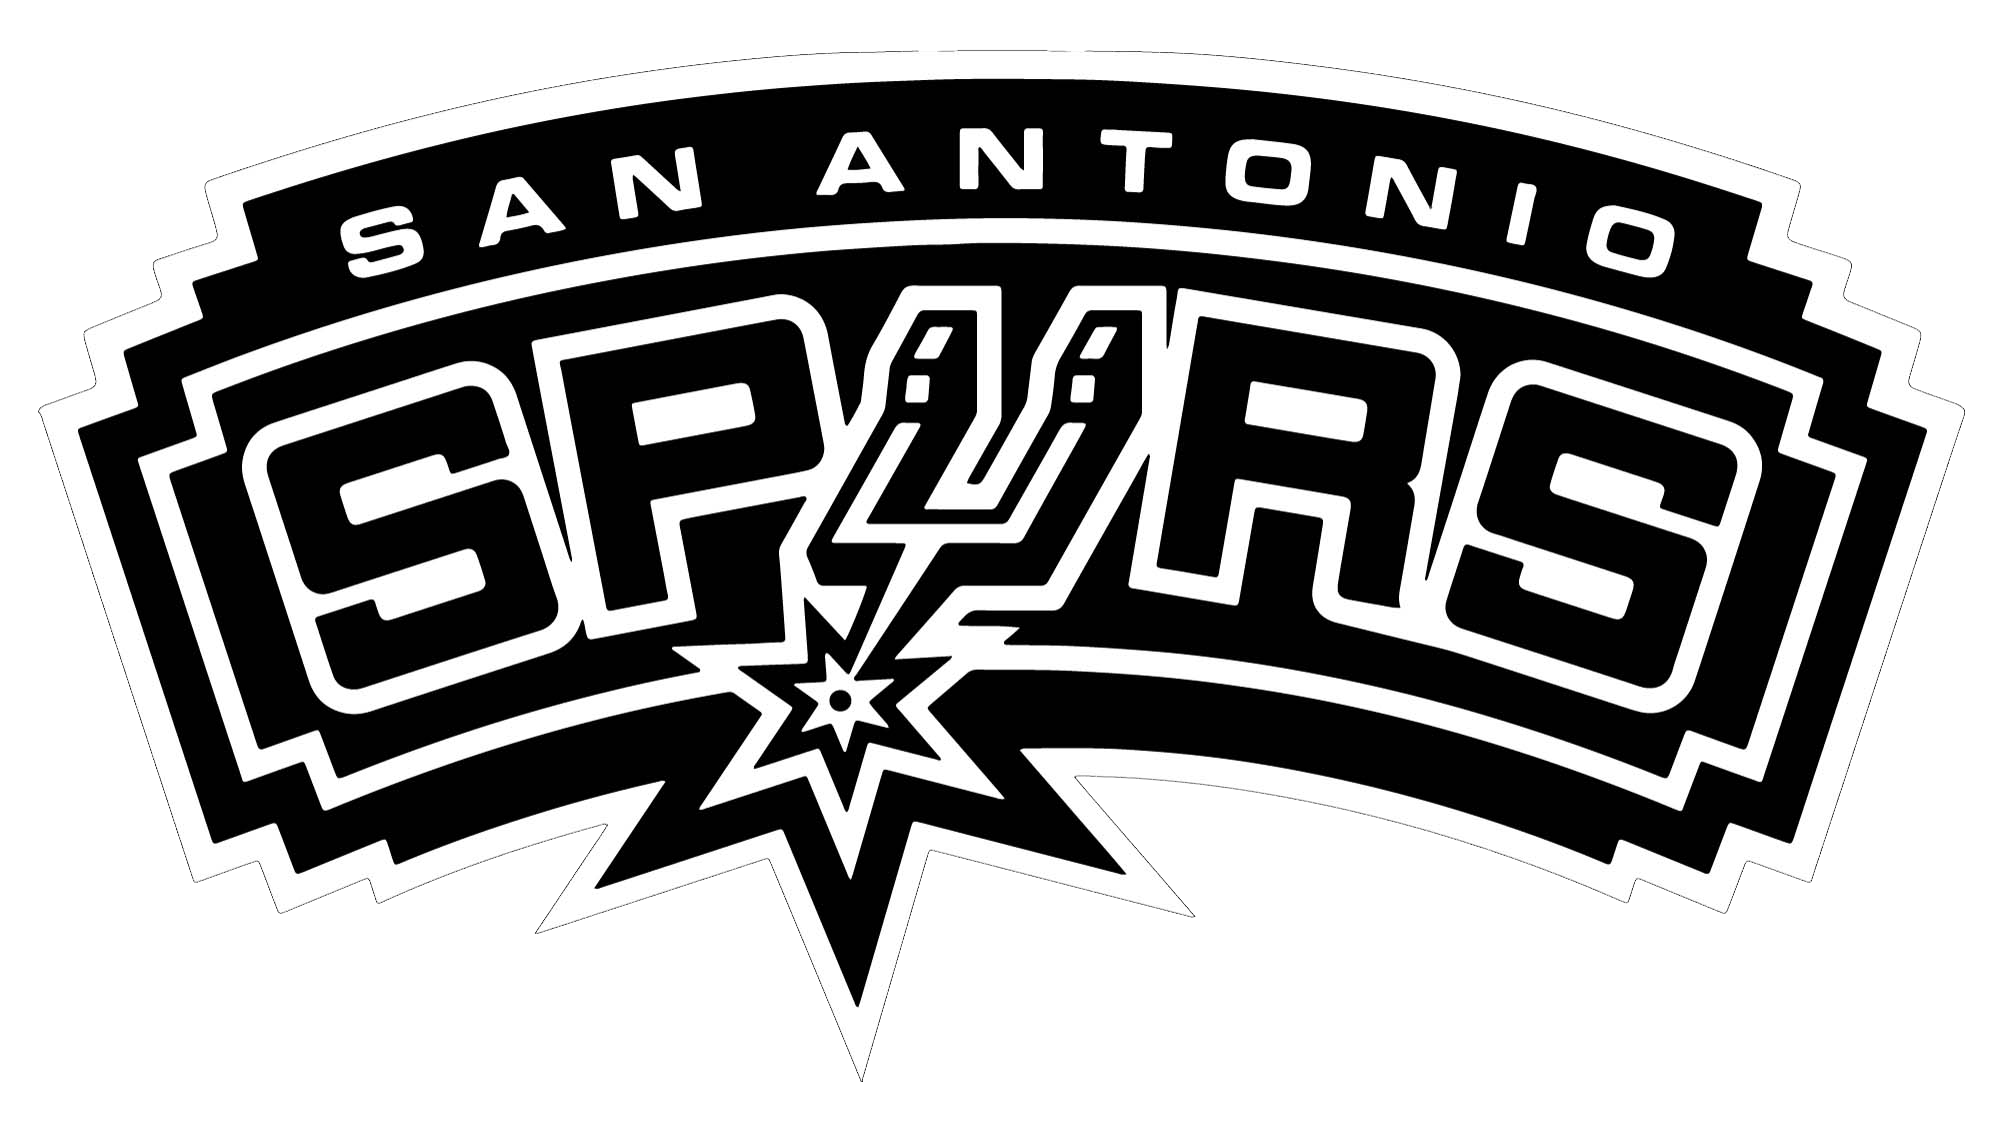 San Antonio Spurs Png - San Antonio Spurs Png Clipart, Transparent background PNG HD thumbnail